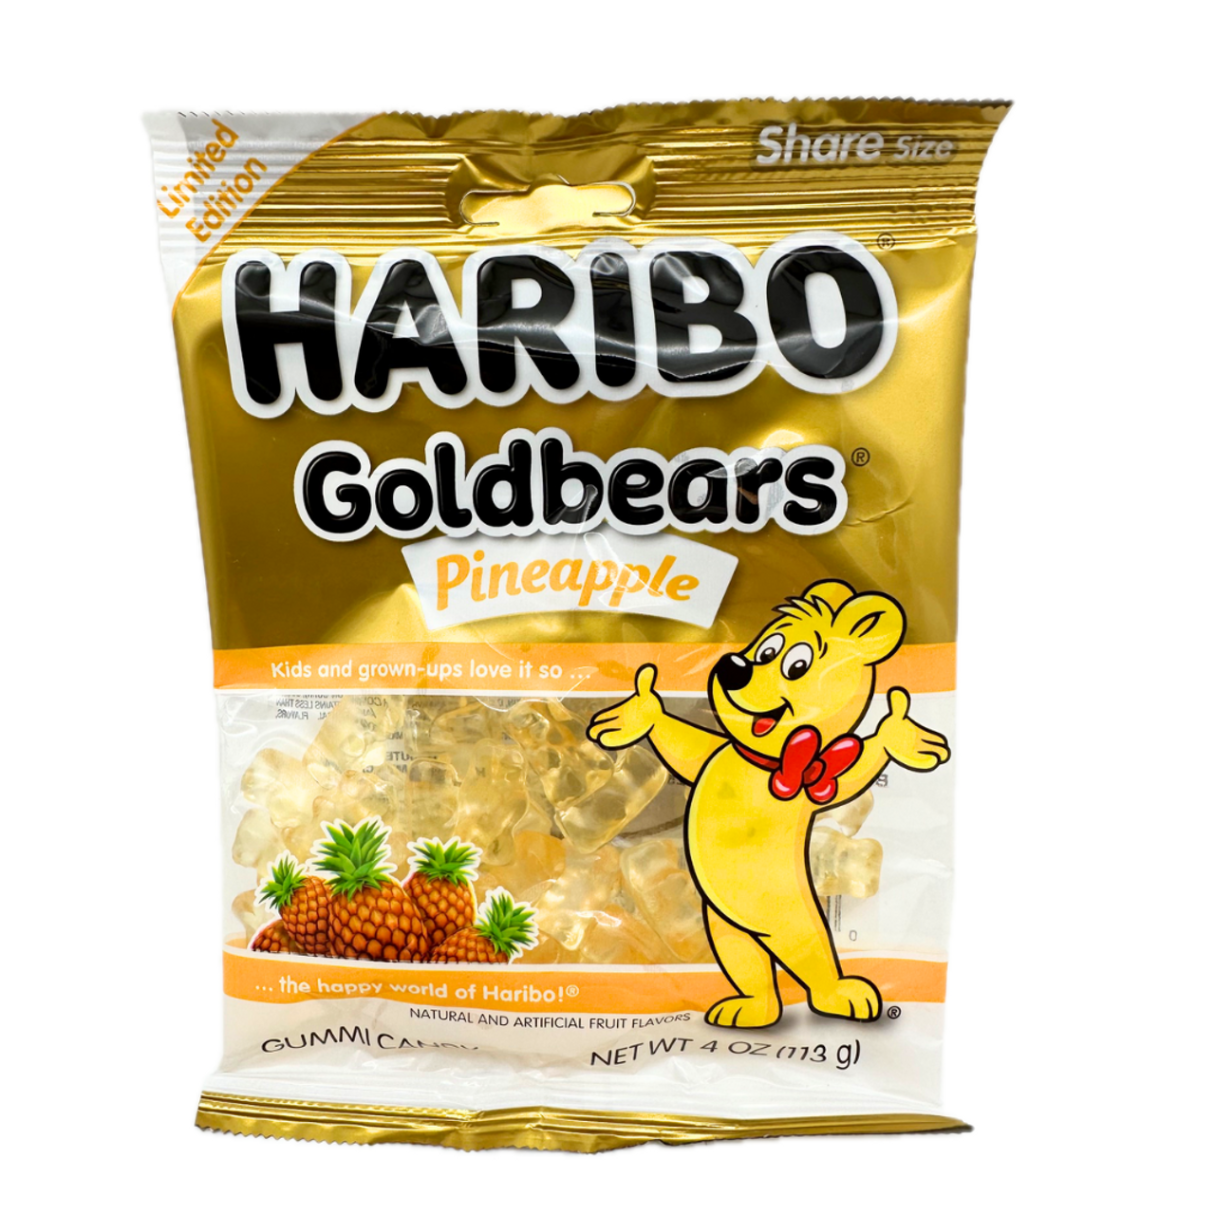 Haribo Pineapple Goldbears Gummi Bears  4oz - 12ct